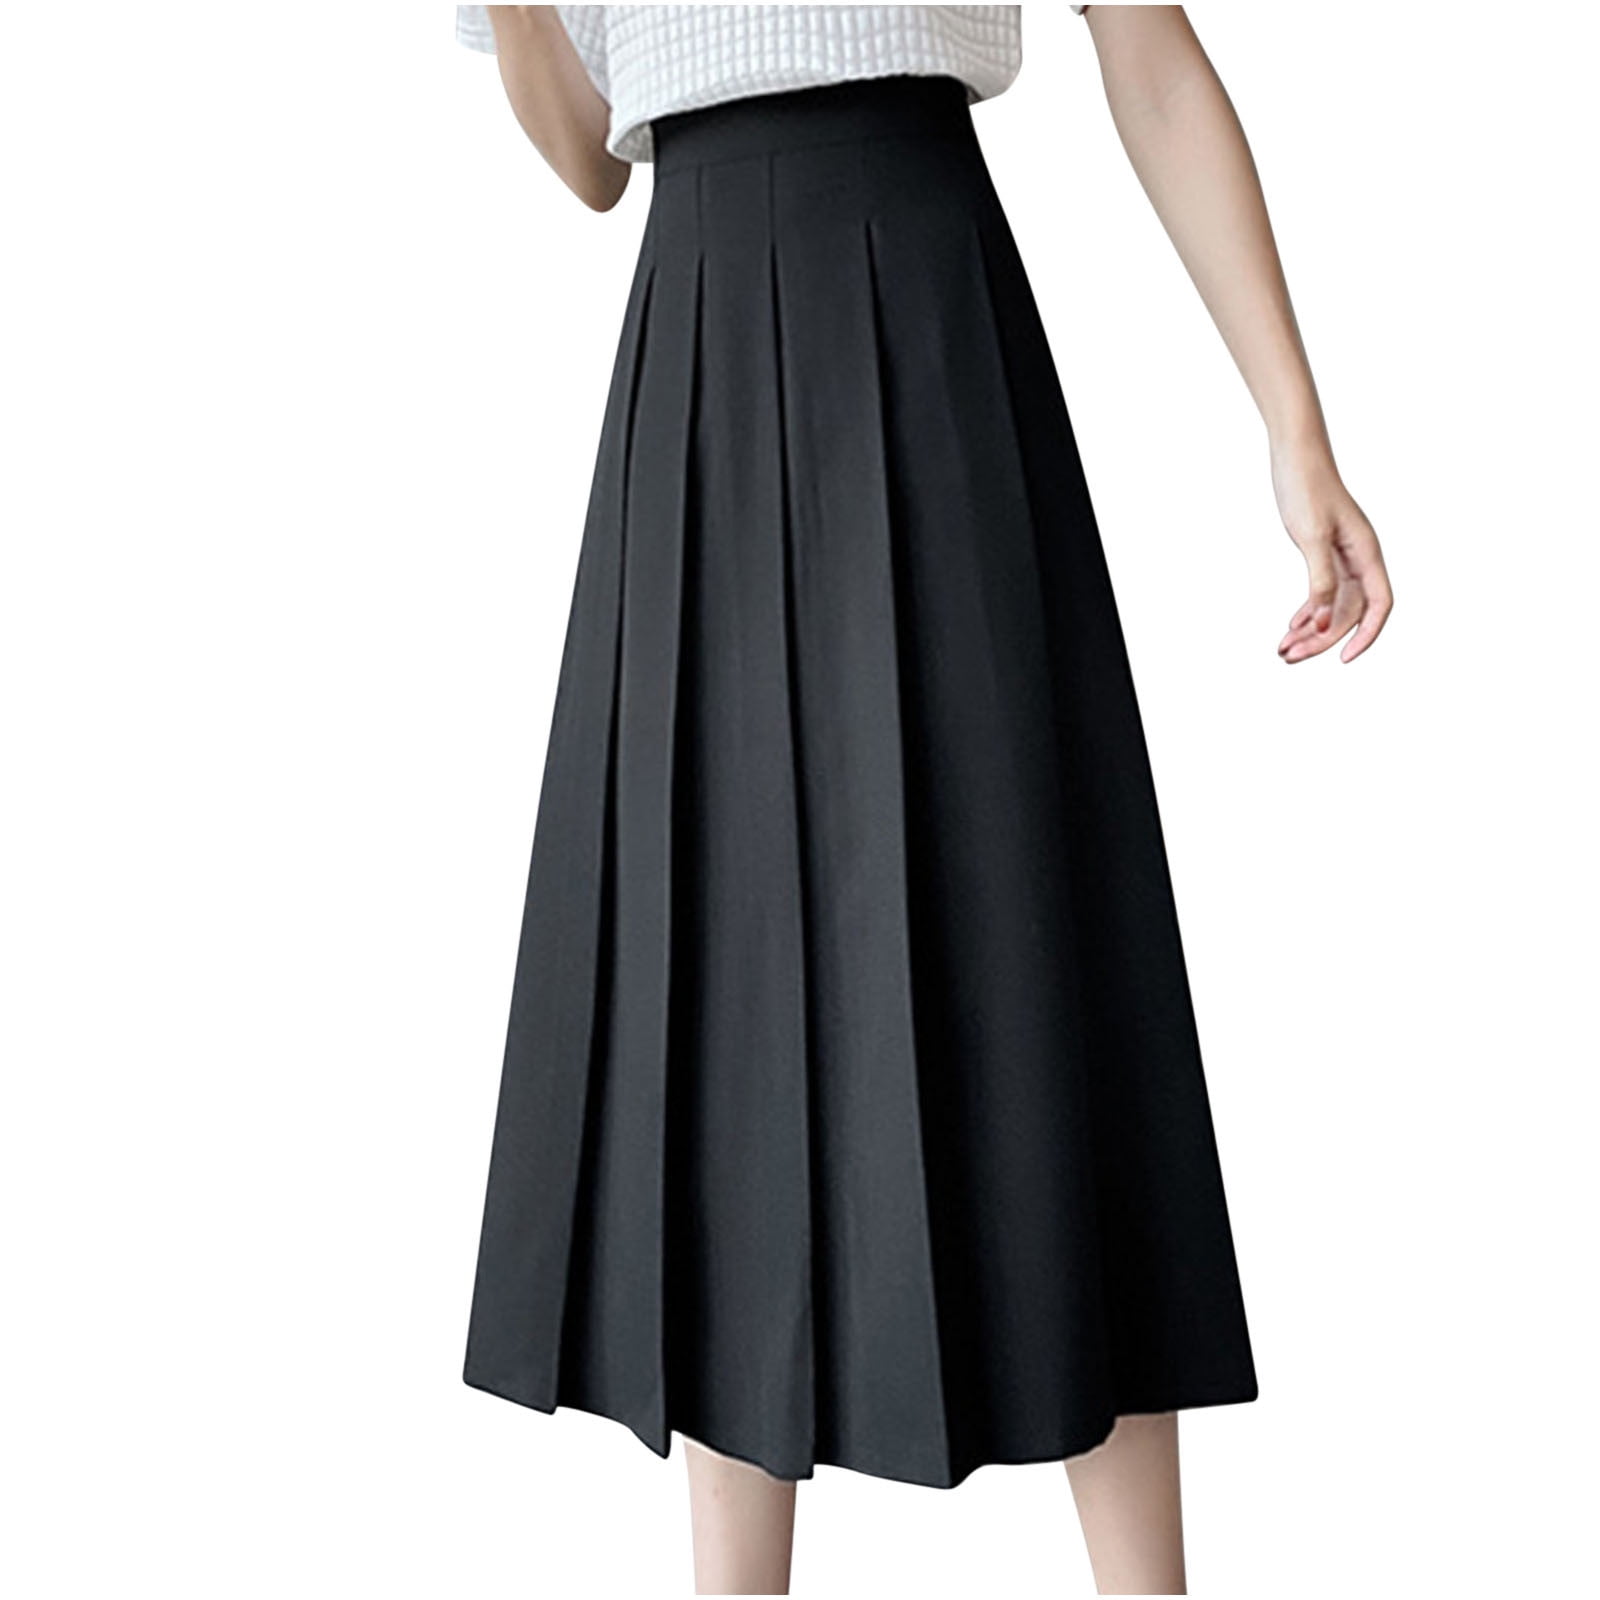 Mrat Skirts for Girls Uniform Women Short Skirt Fashion Ladies Pleated ...